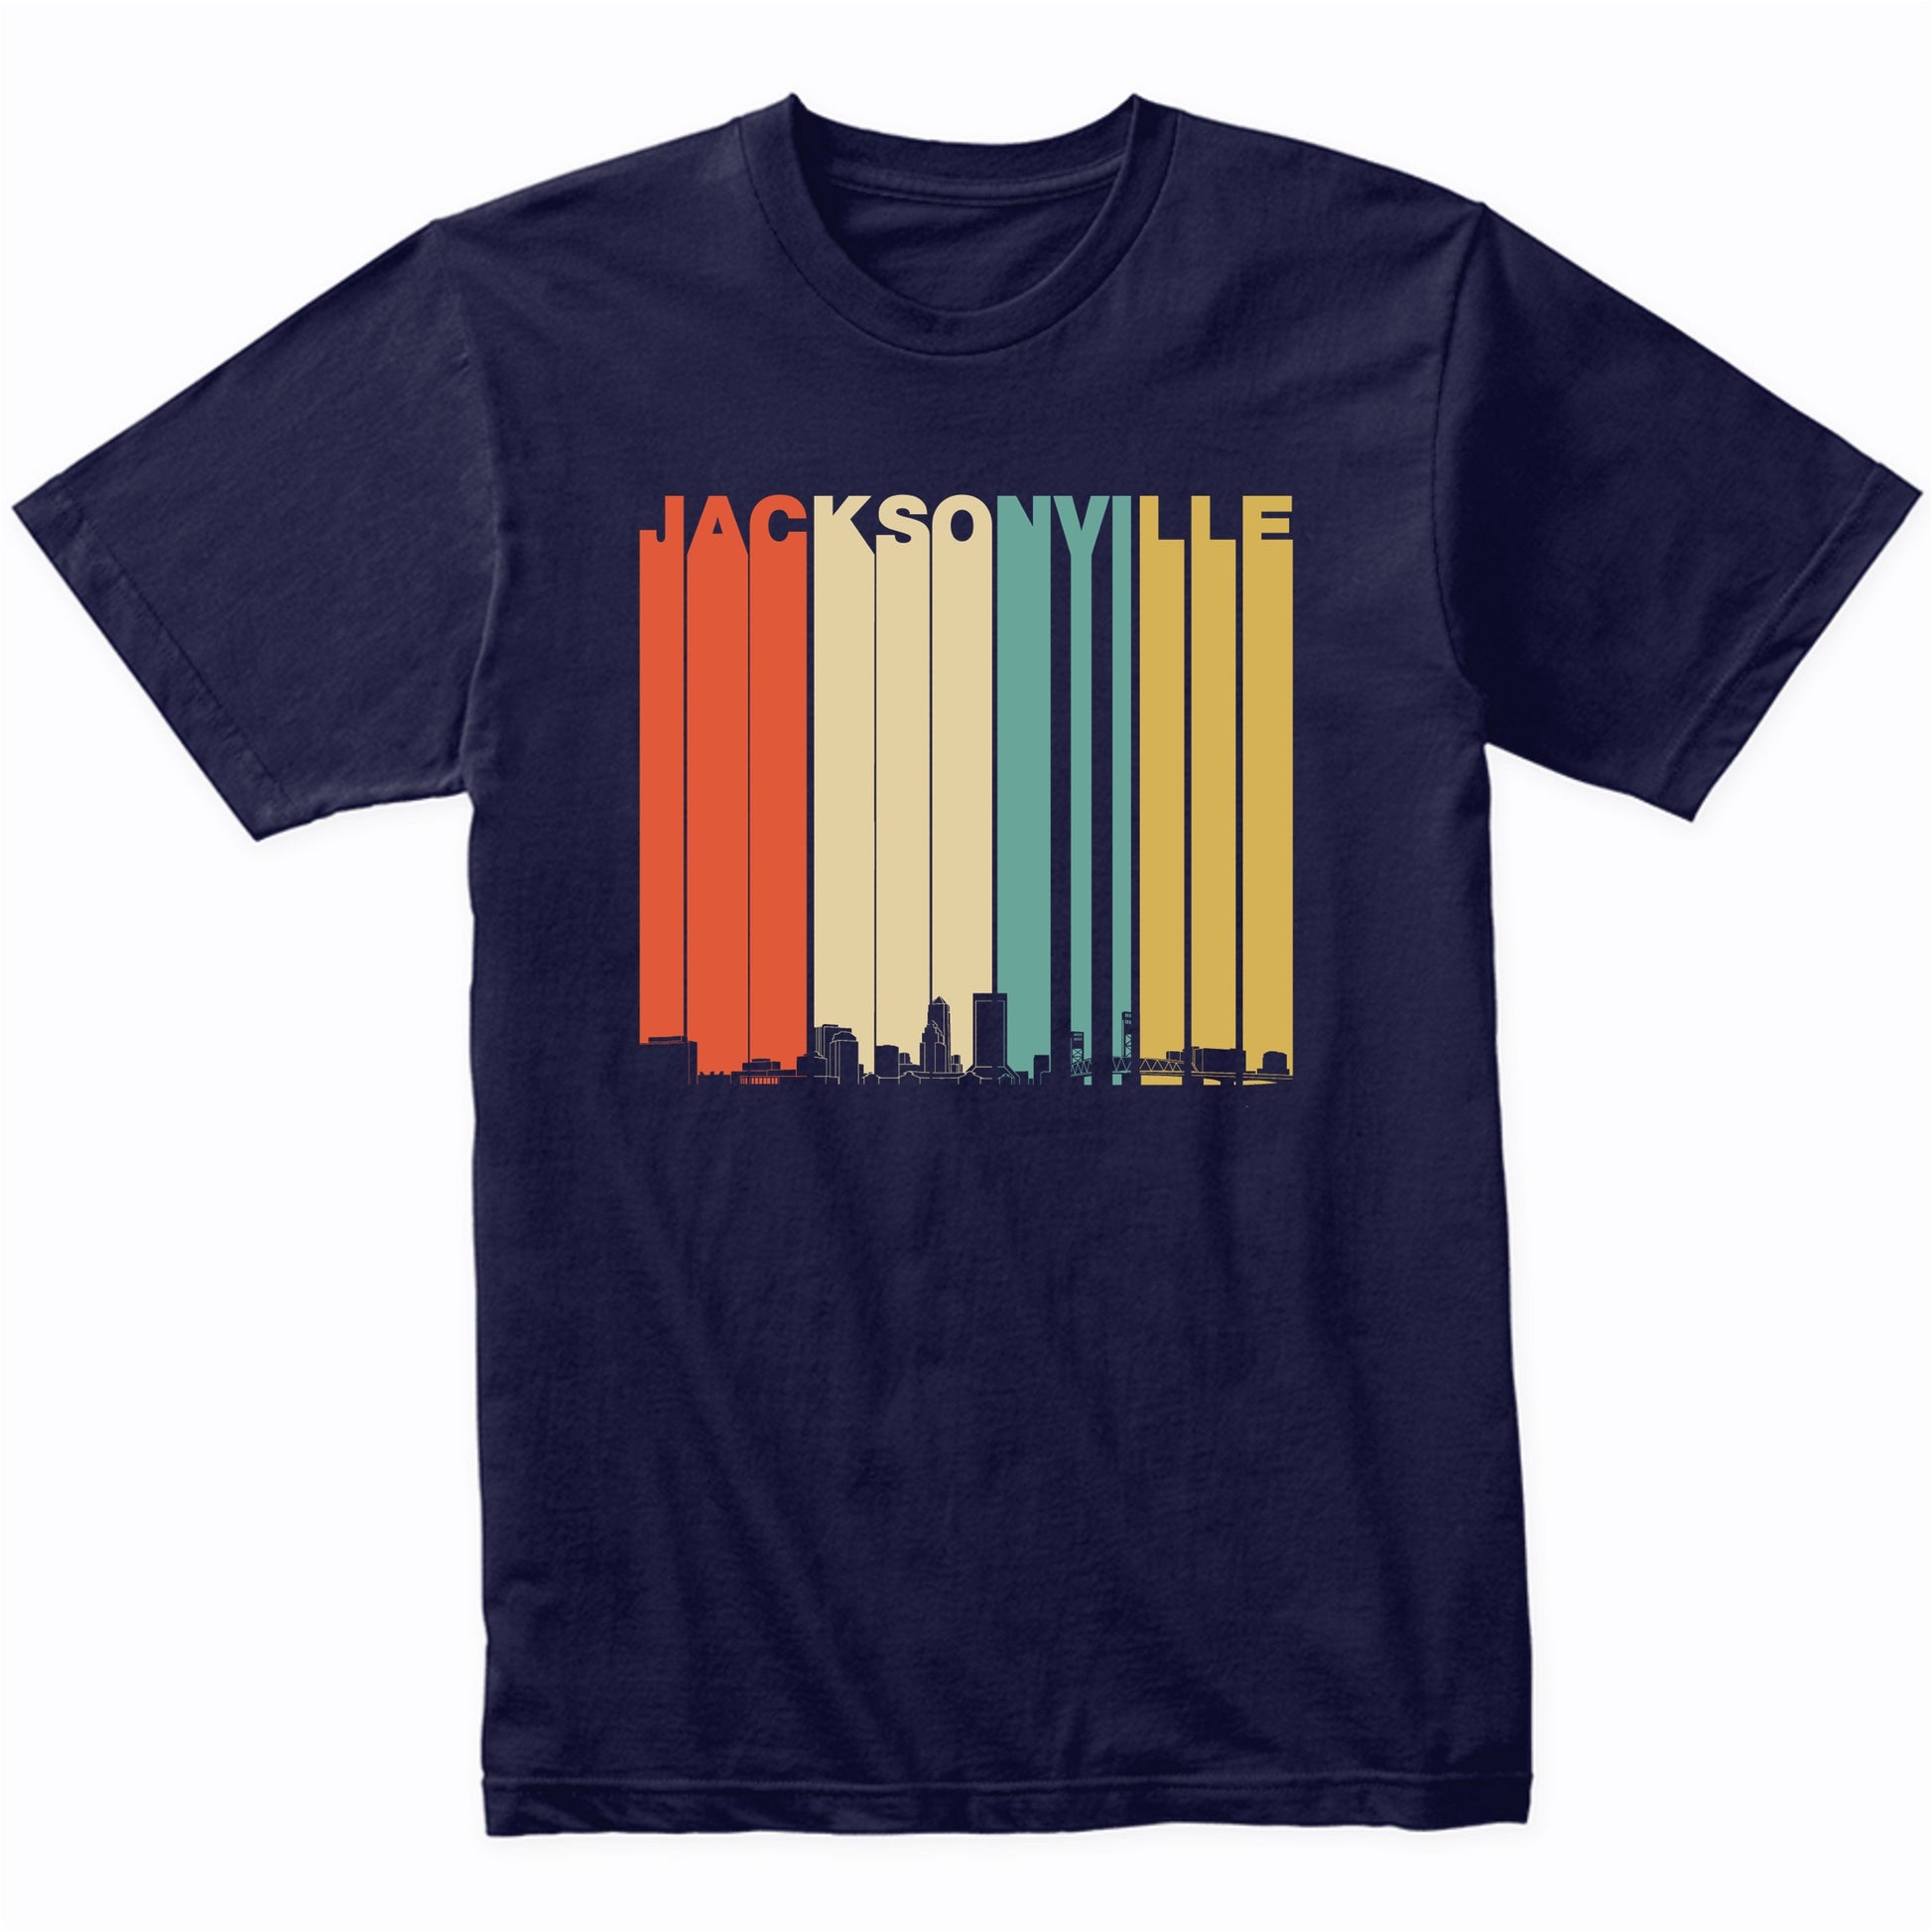 Vintage 1970's Style Jacksonville Florida Skyline T-Shirt